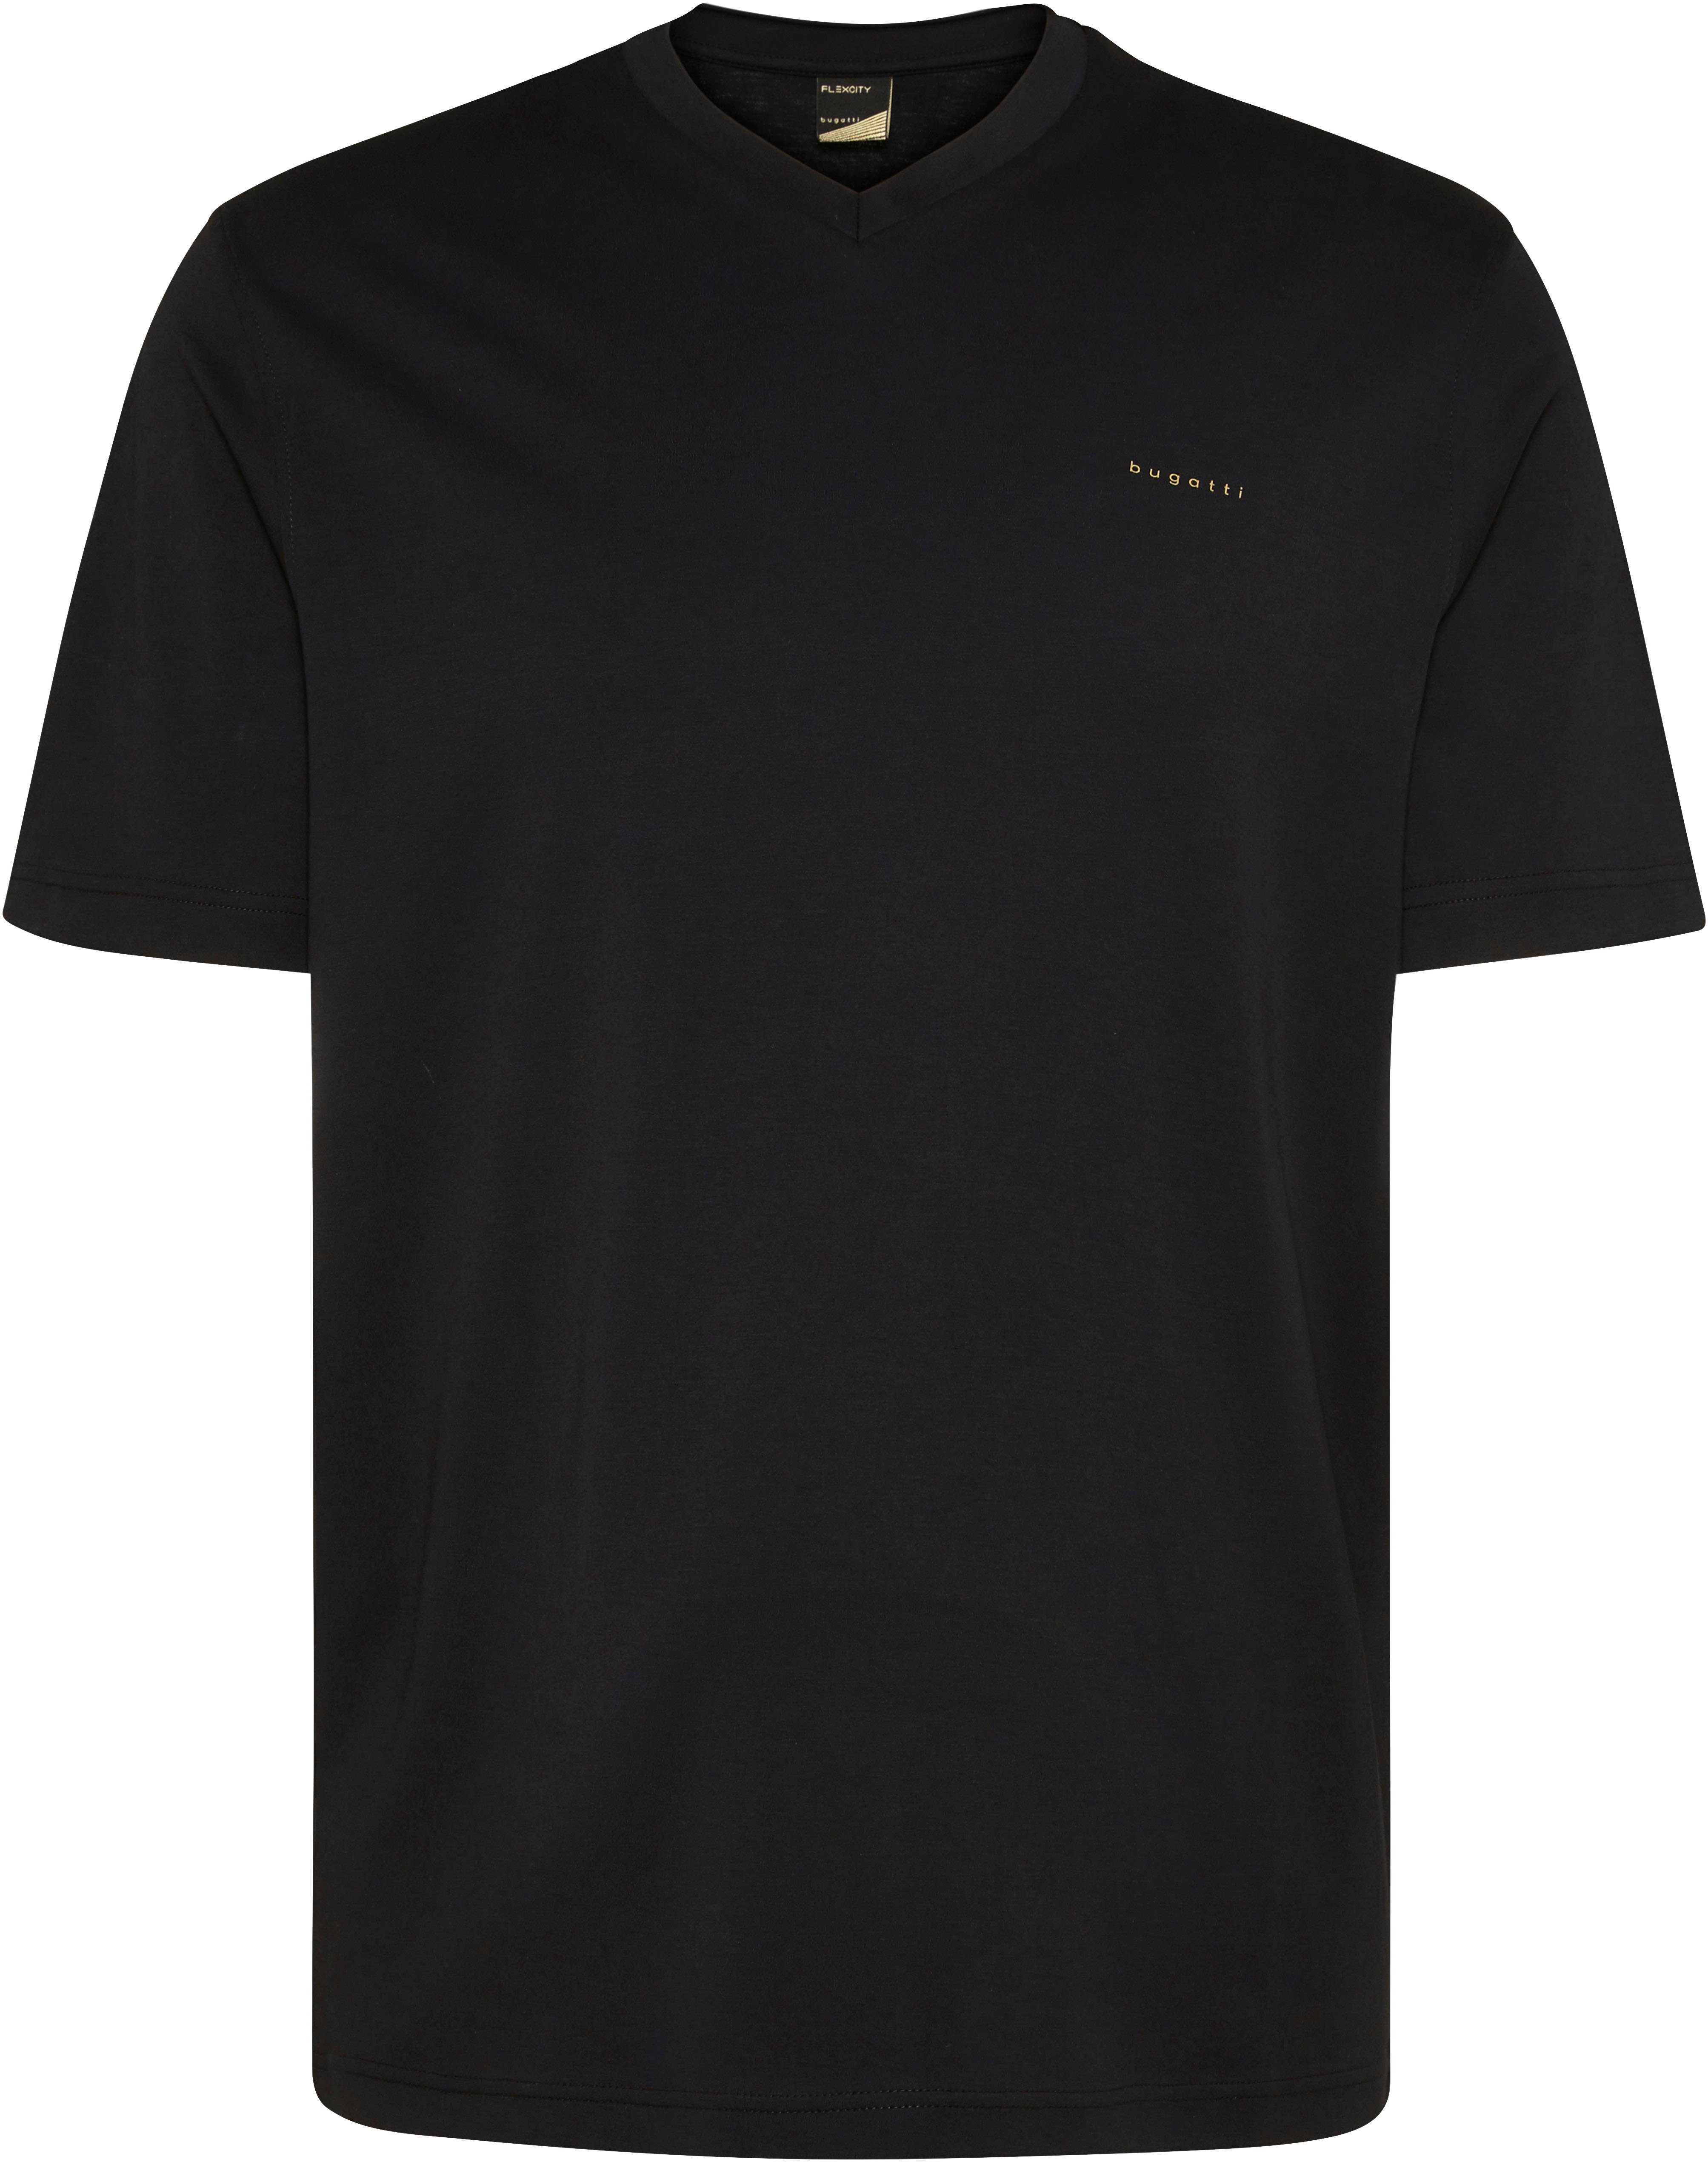 bugatti V-Shirt unifarben schwarz